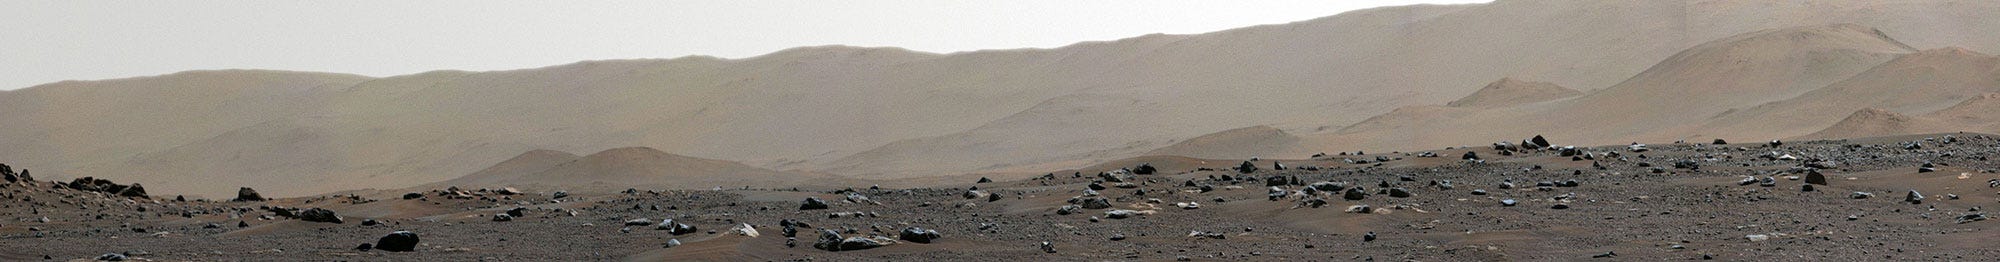 jezero crater rim perseverance mars rover mastcam z panorama